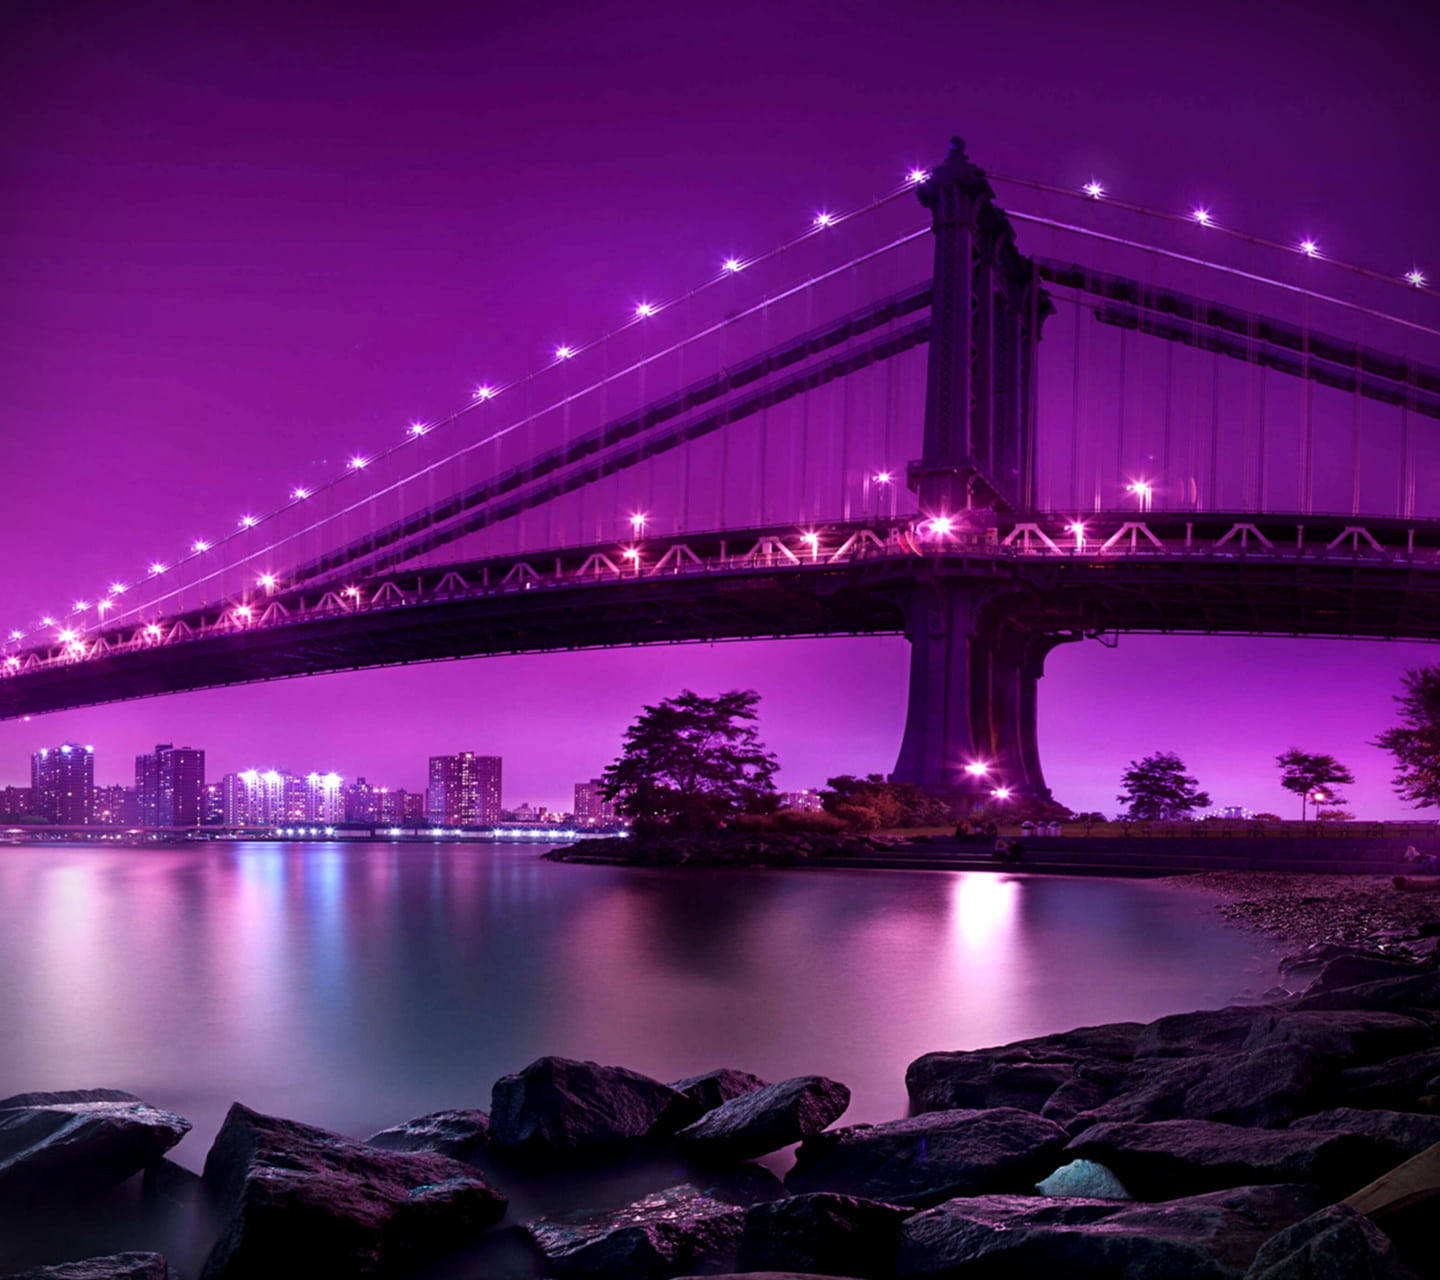 Dark Purple Sky And Bridge